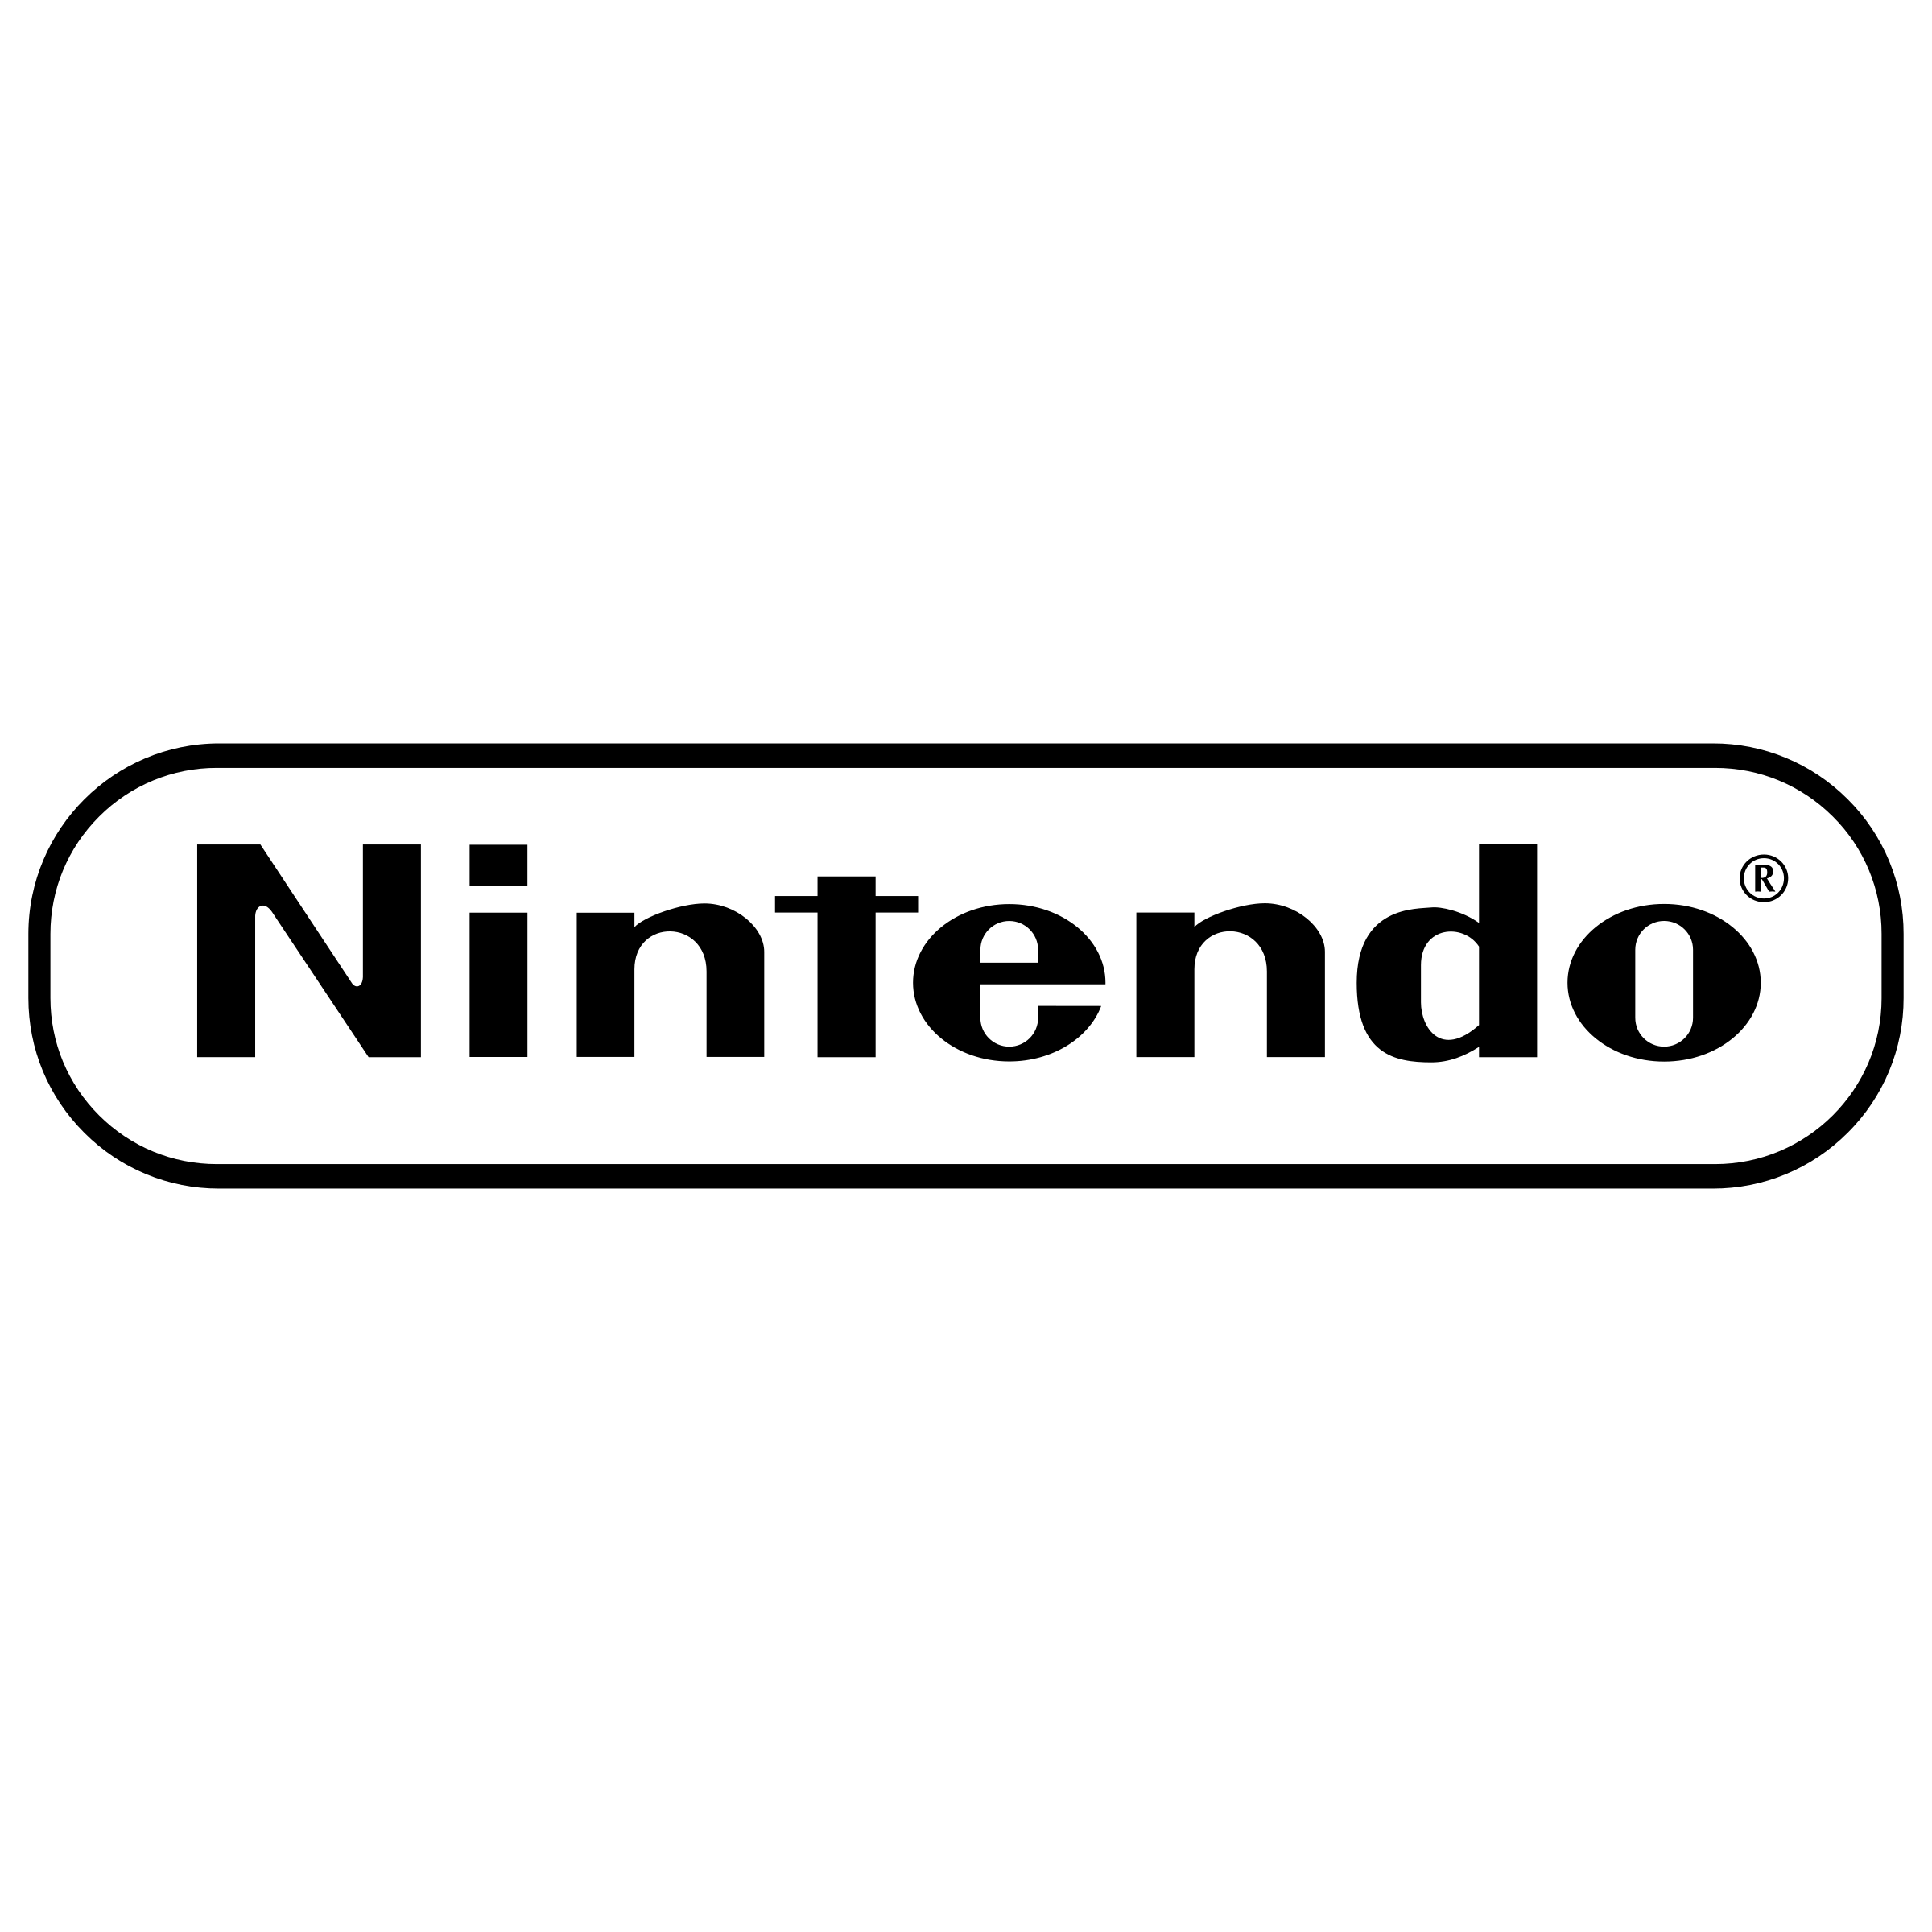 Nintendo Logo - Nintendo Logo PNG Transparent & SVG Vector